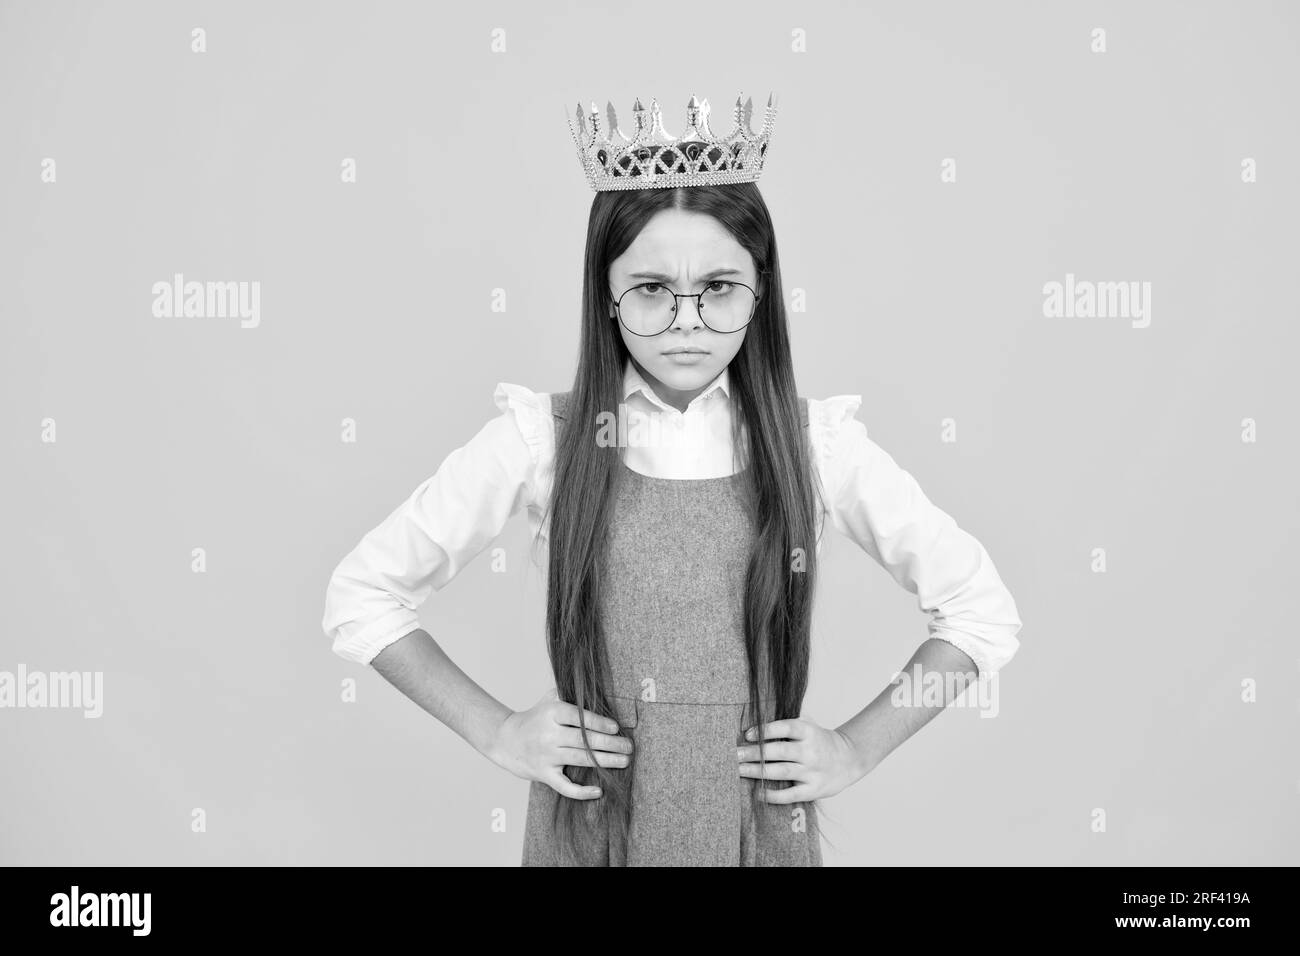 Princess school girl. Girls party, funny kid in crown. Child queen wear ...